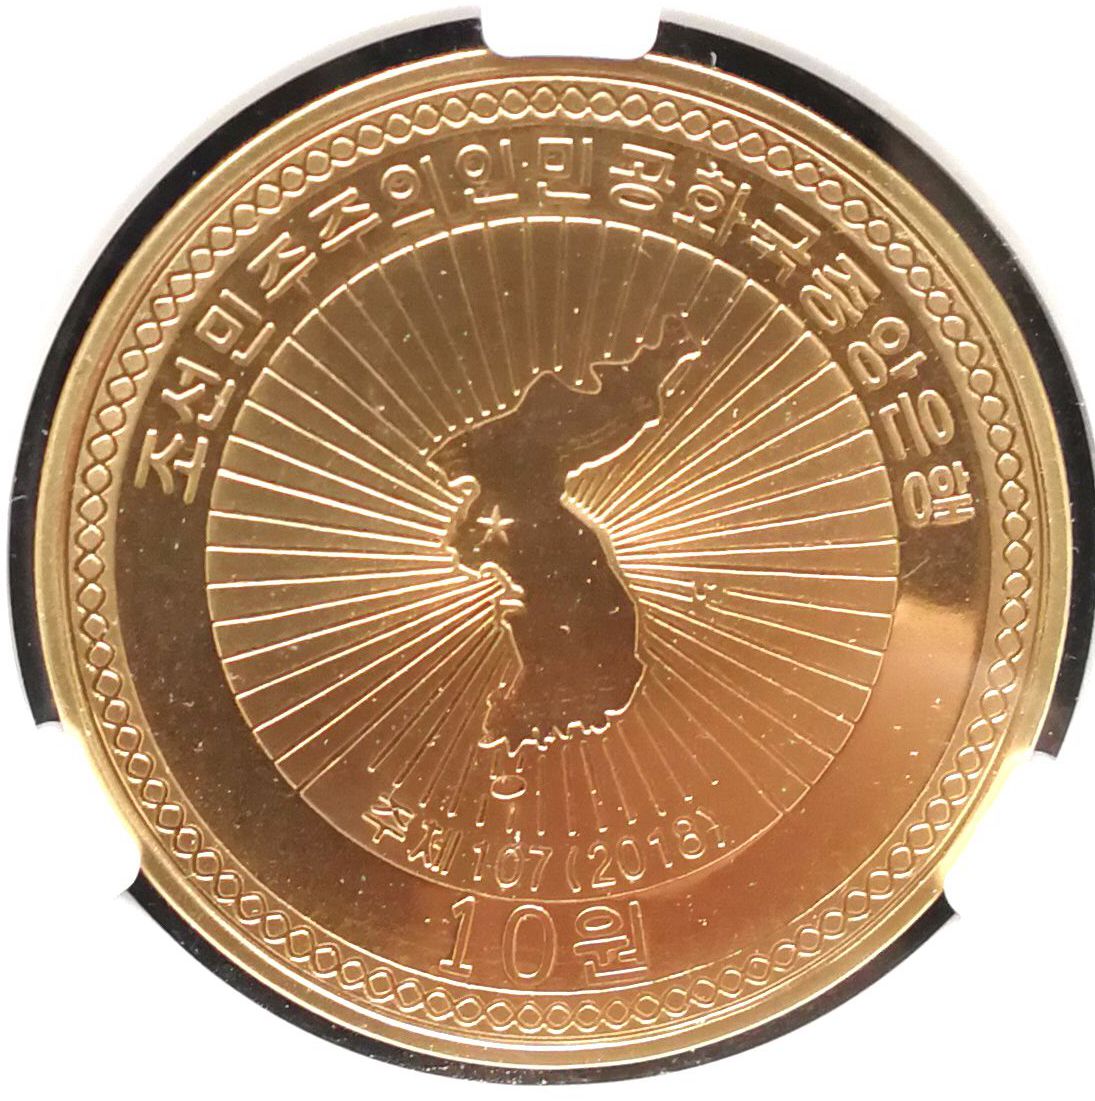 L3371, Korea Proof Bronze Coin, "70th Anniv. April Conference" 2018 Korean Map - Click Image to Close